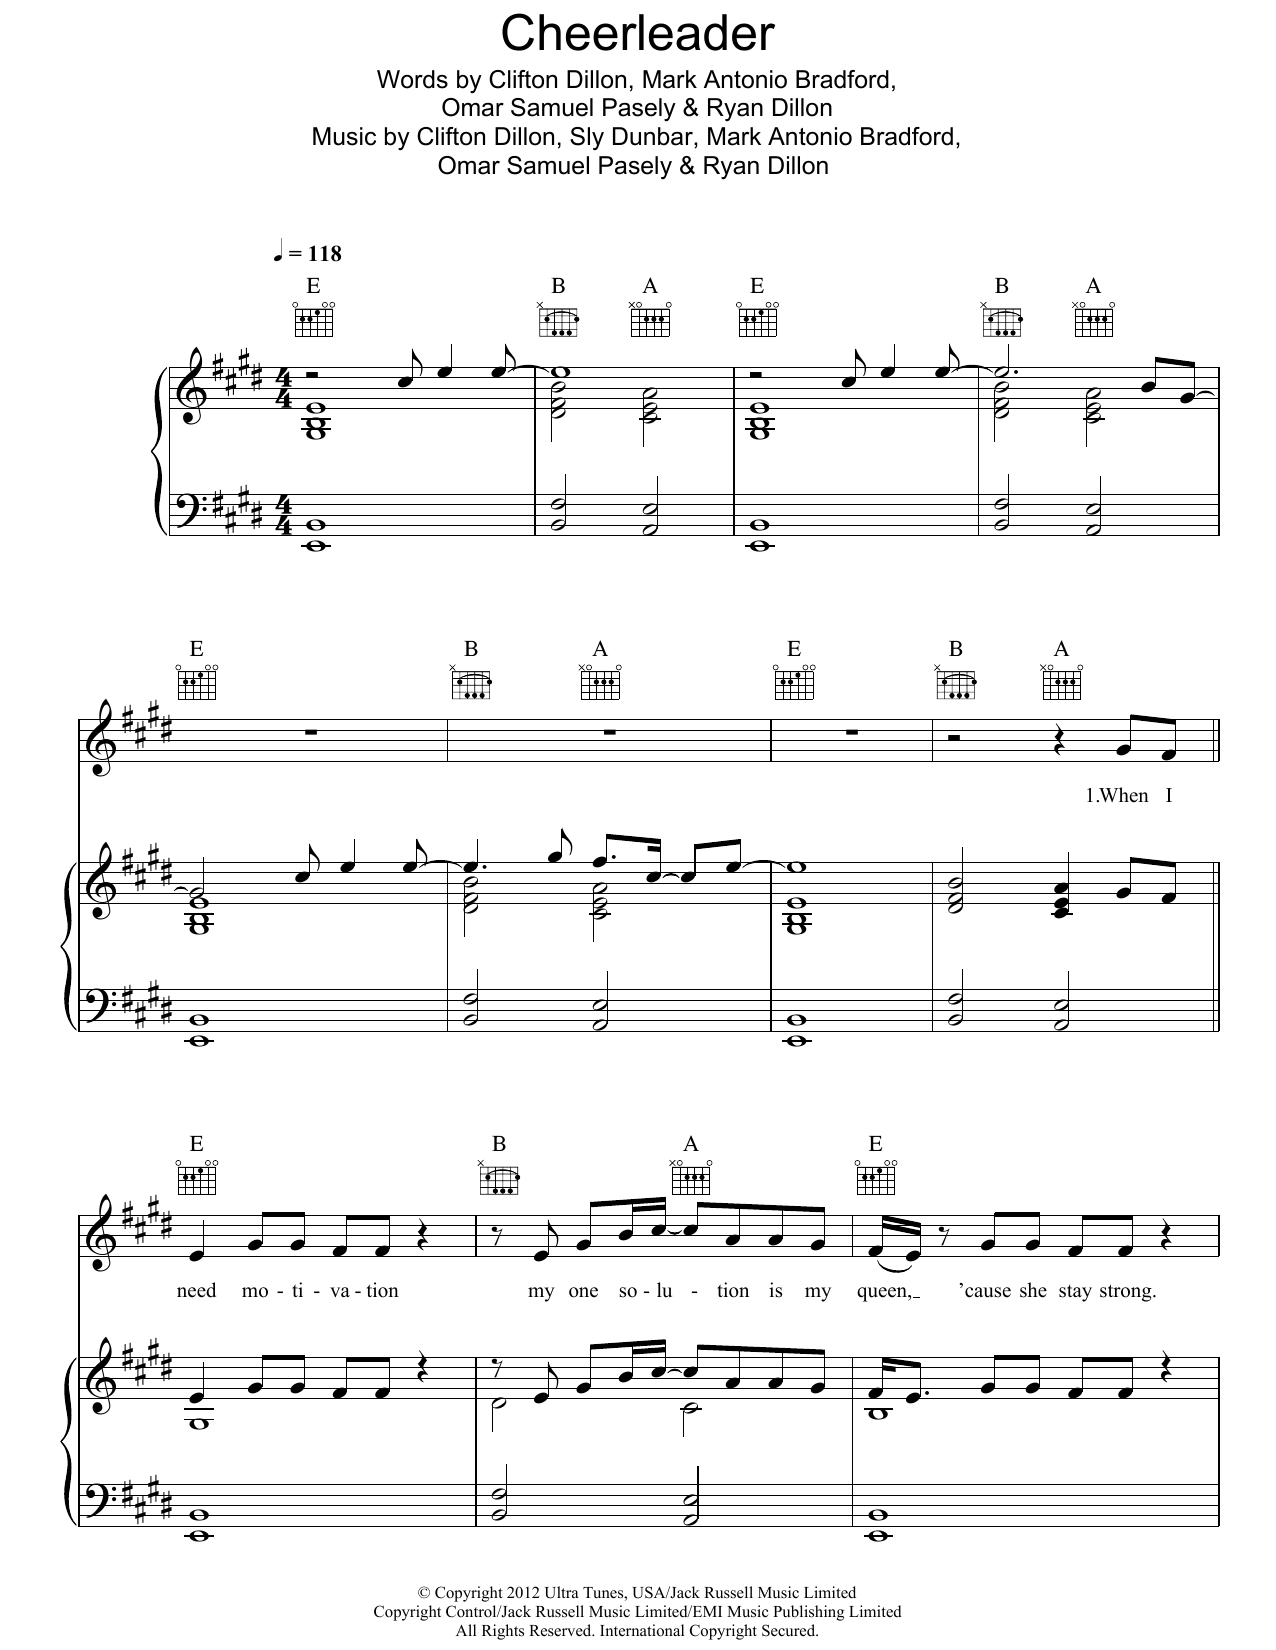 Omi Cheerleader Sheet Music Notes & Chords for Ukulele Lyrics & Chords - Download or Print PDF